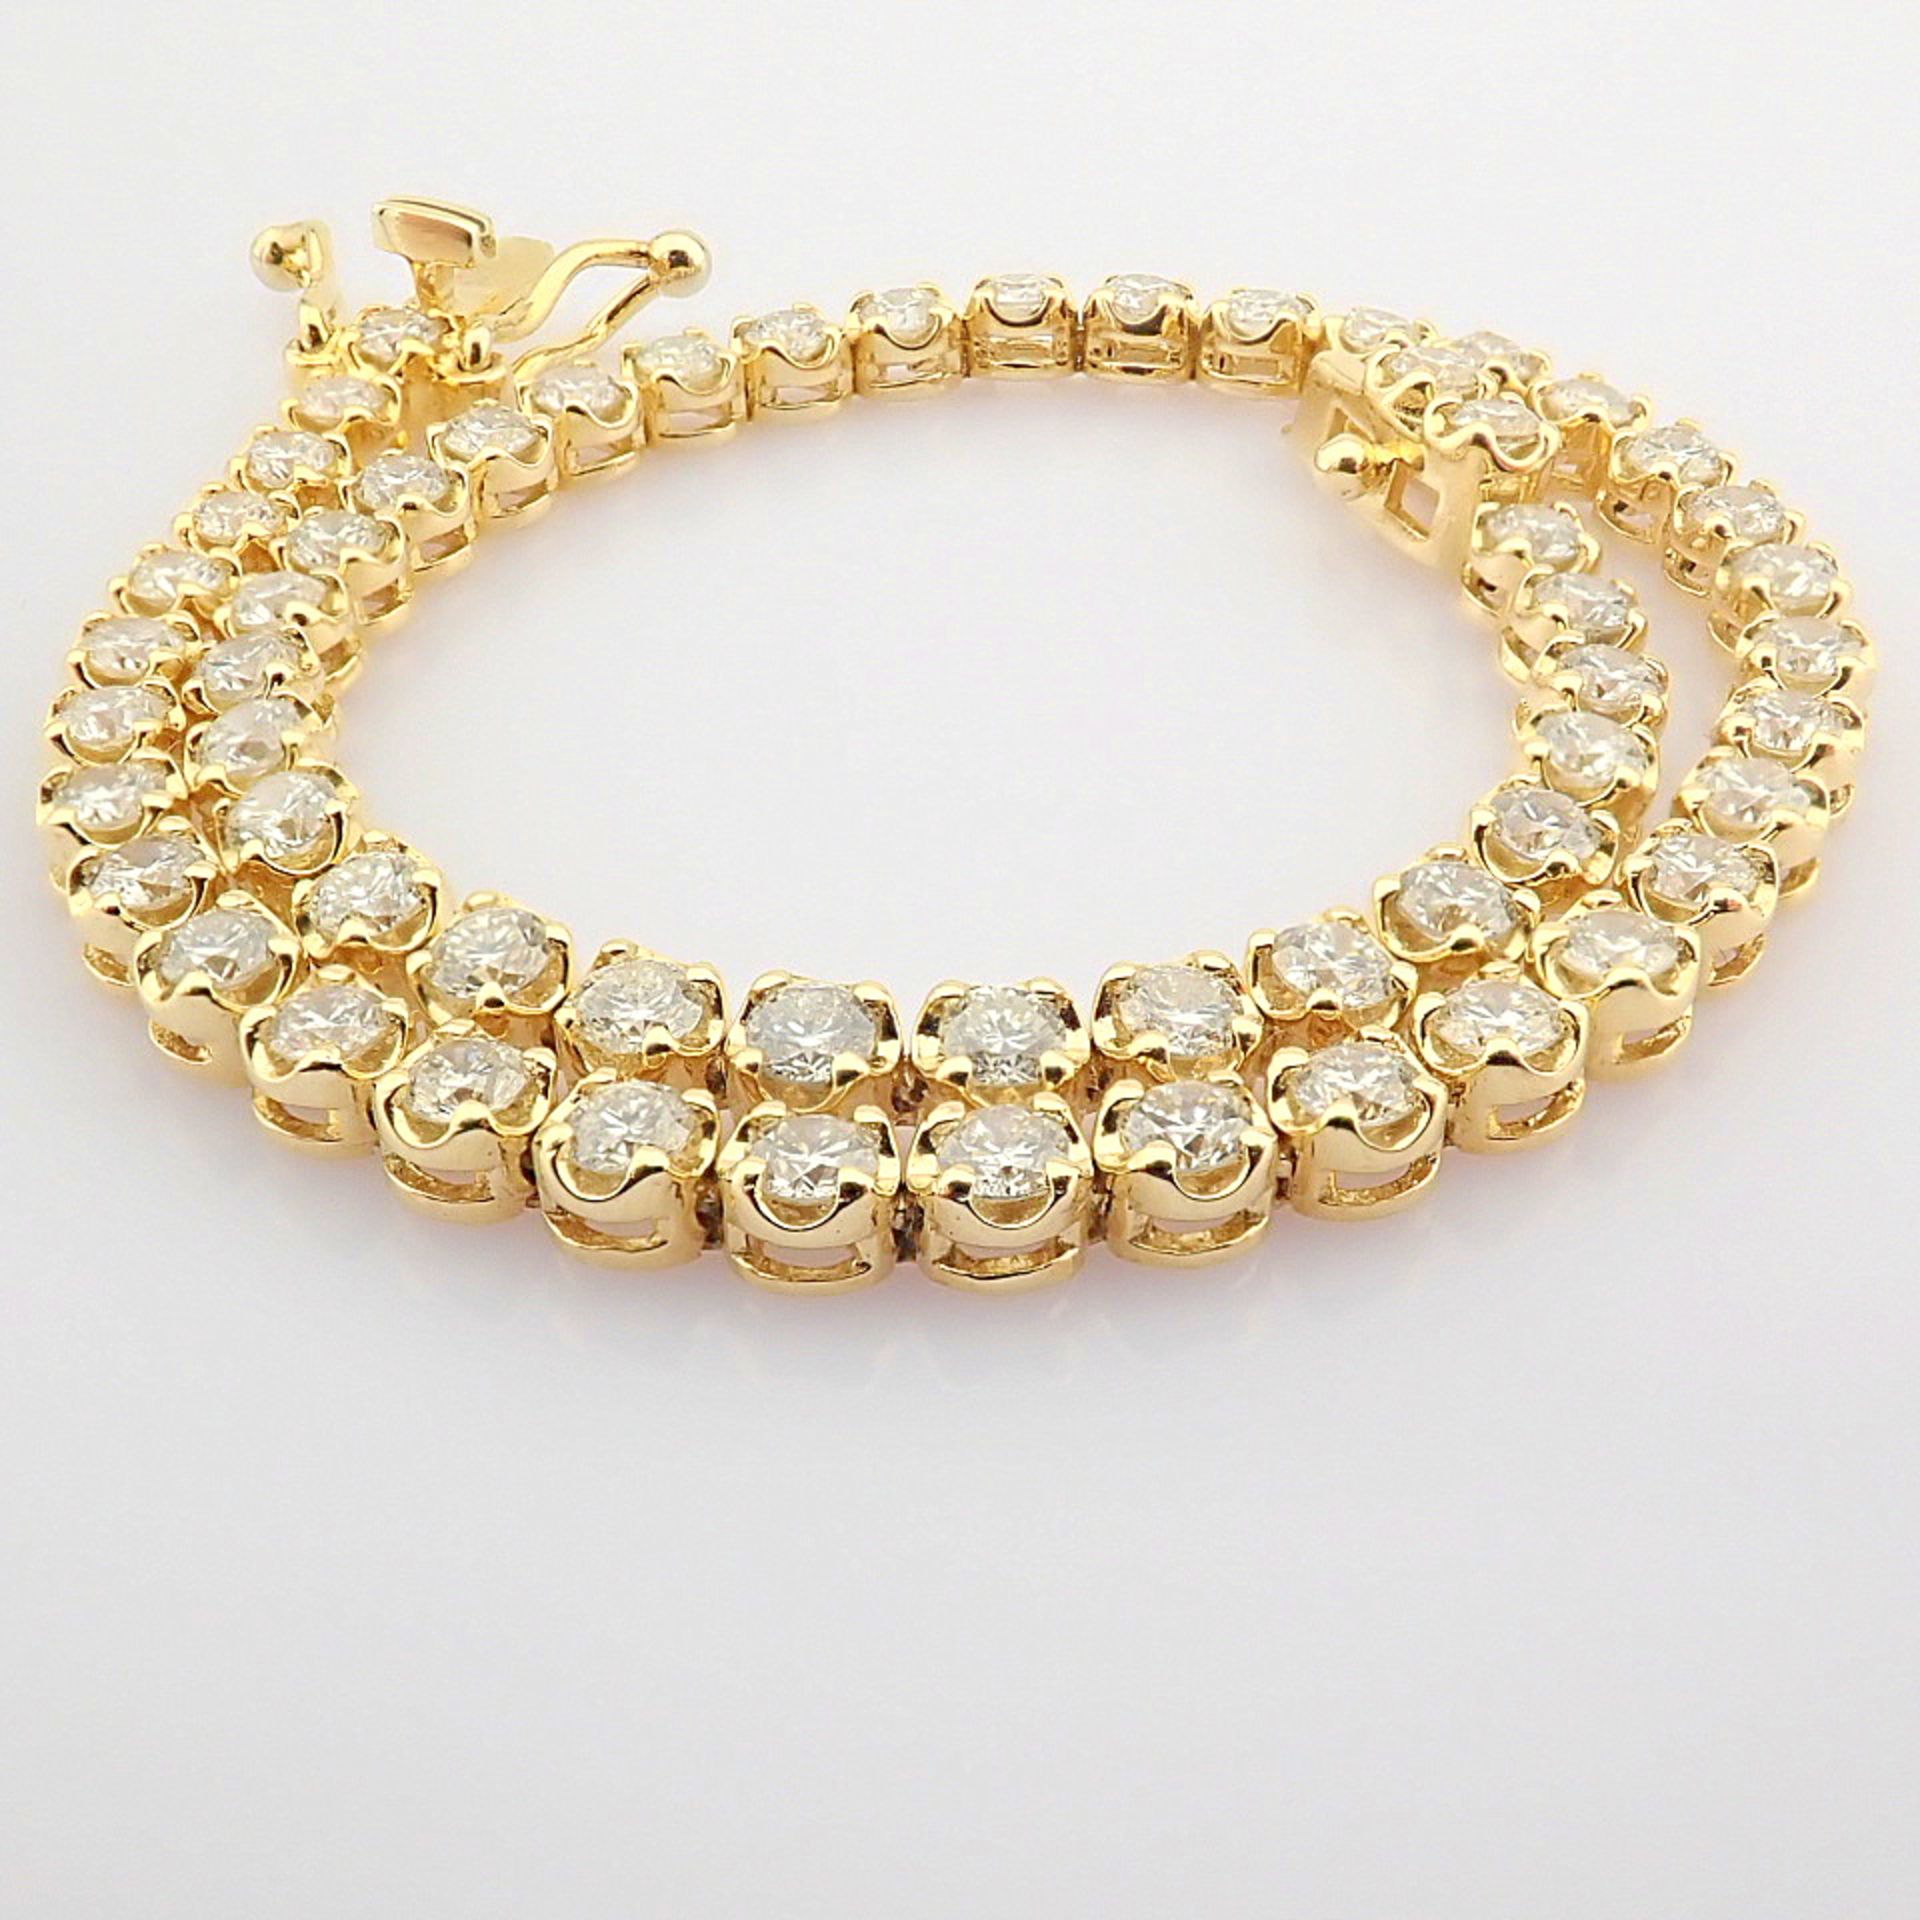 2,10 Ct. Diamond Tennis Bracelet (Crown) - 14K Yellow Gold - Image 6 of 14